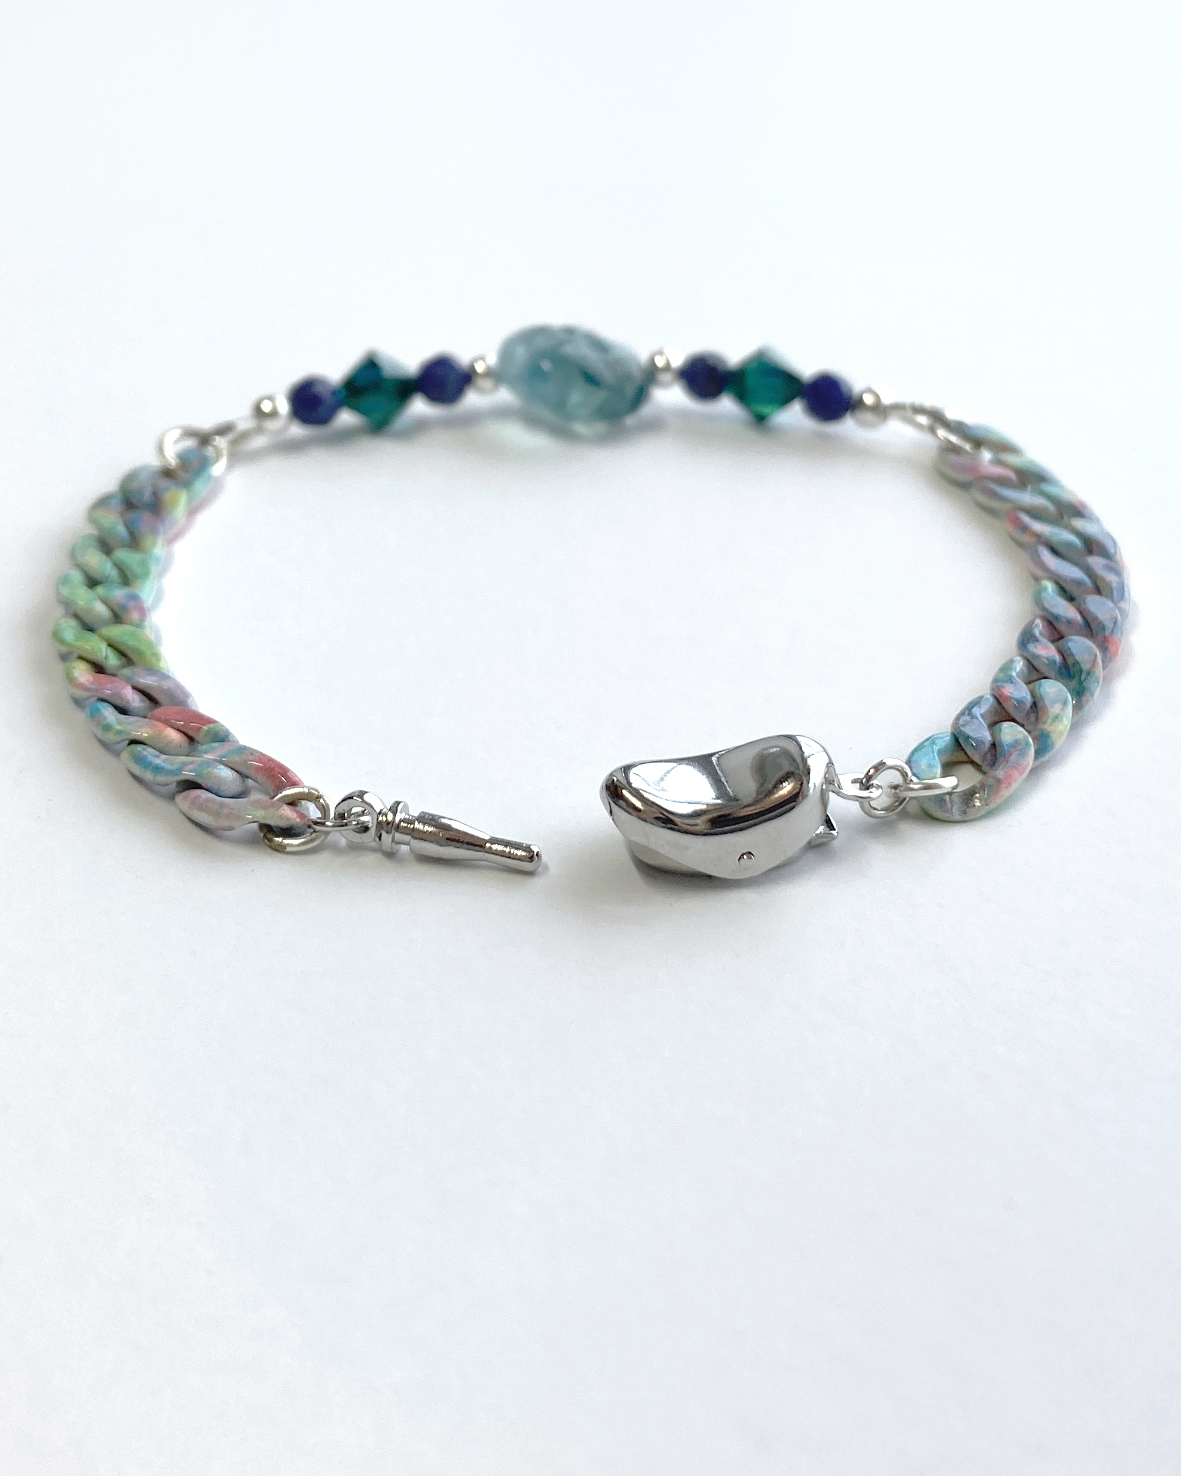 clover blue fluorite bracelet with lapis lazuli, dreamy pattern chain and silver ingot buckle clasp